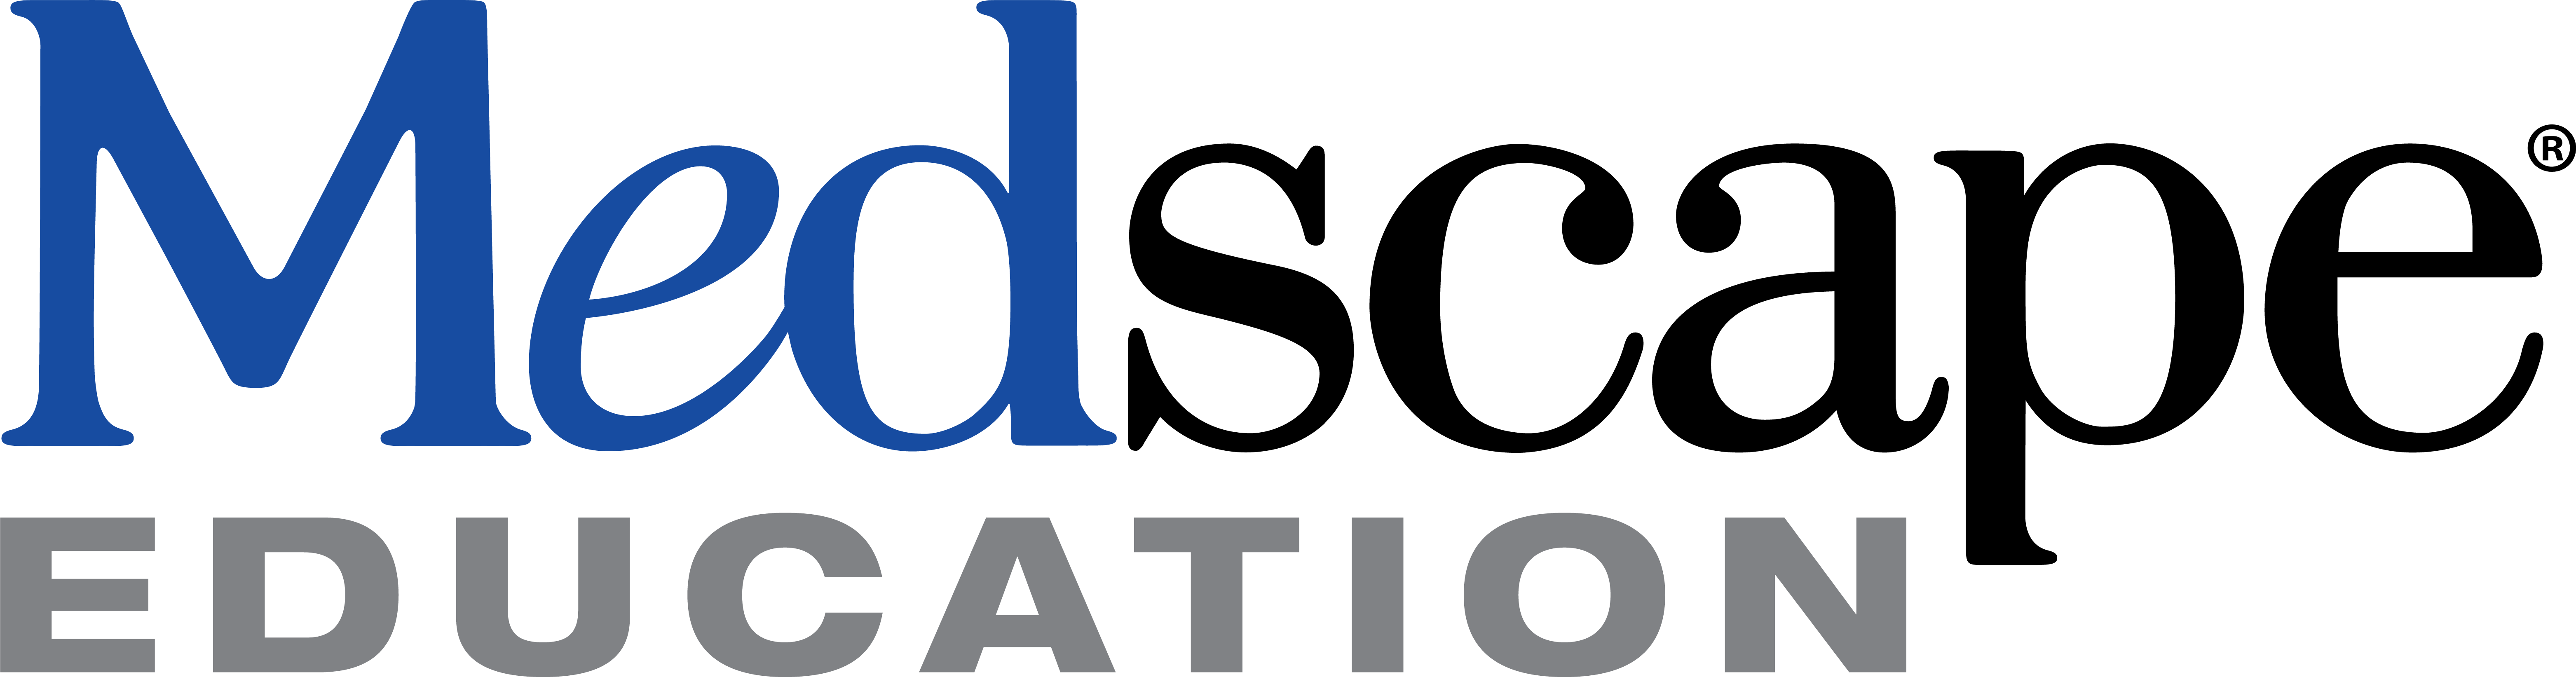 Logotipo de educación de Medscape